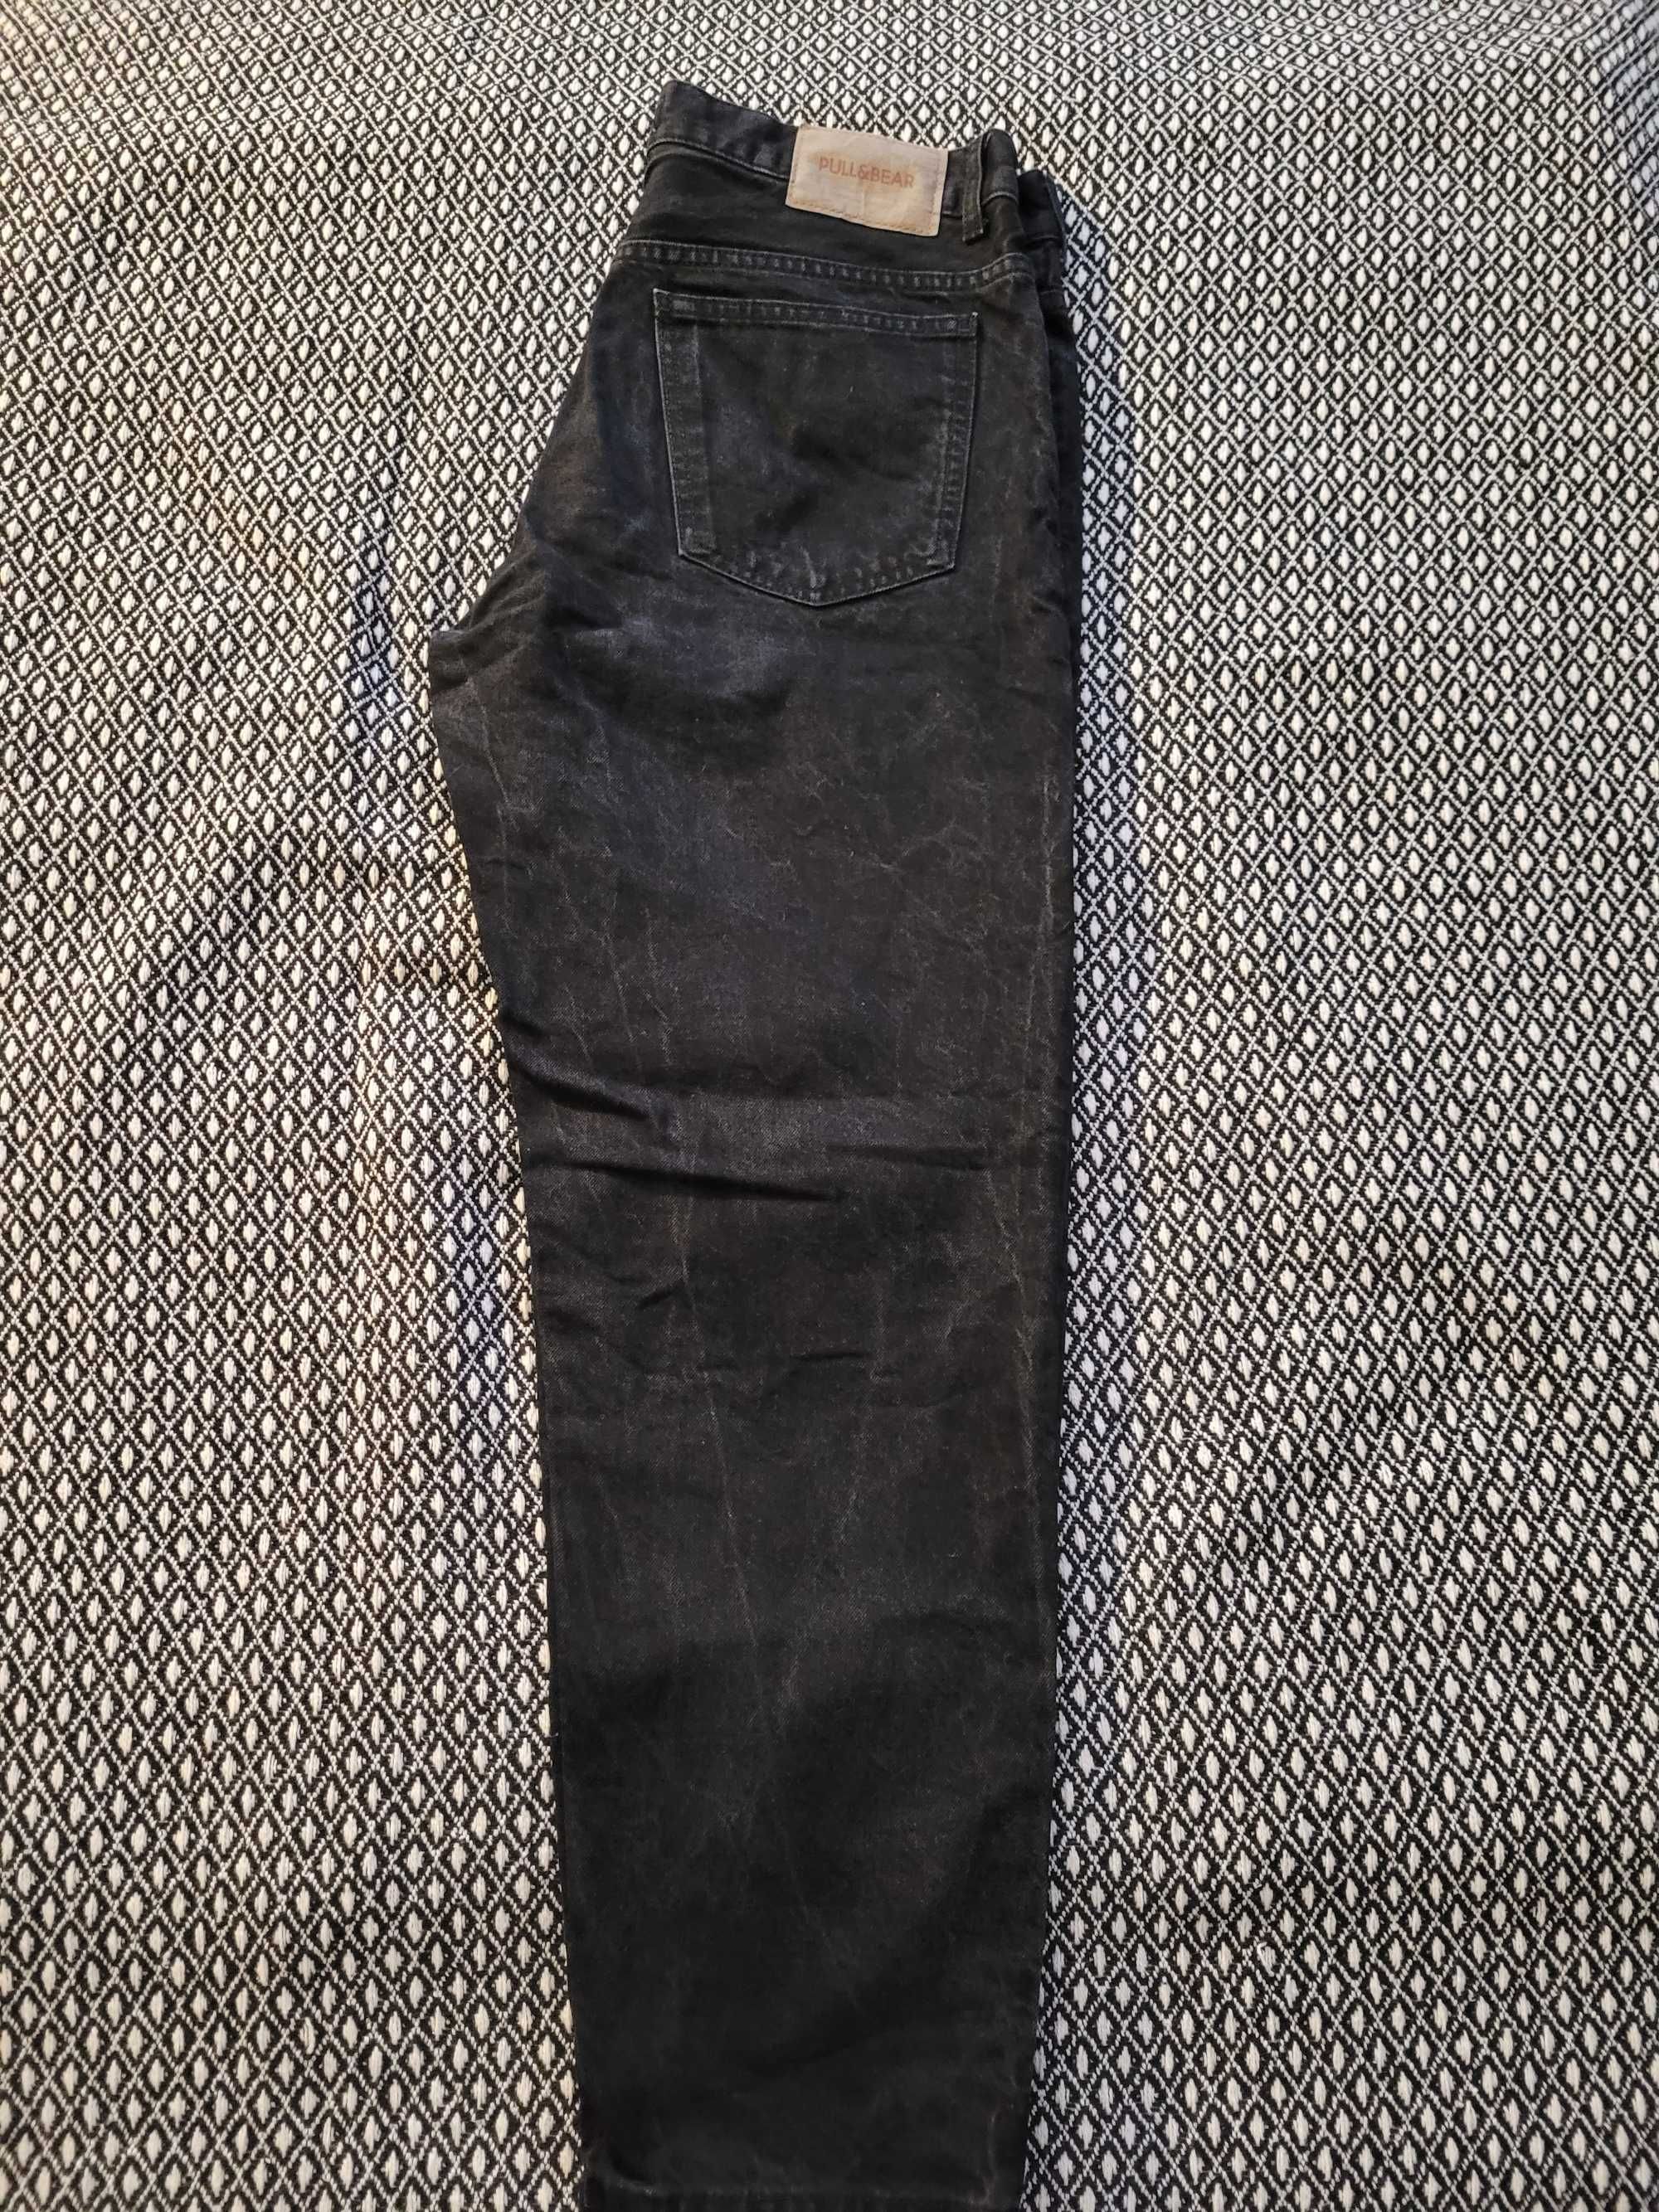 Spodnie jeans 4 szt. Pull&Bear